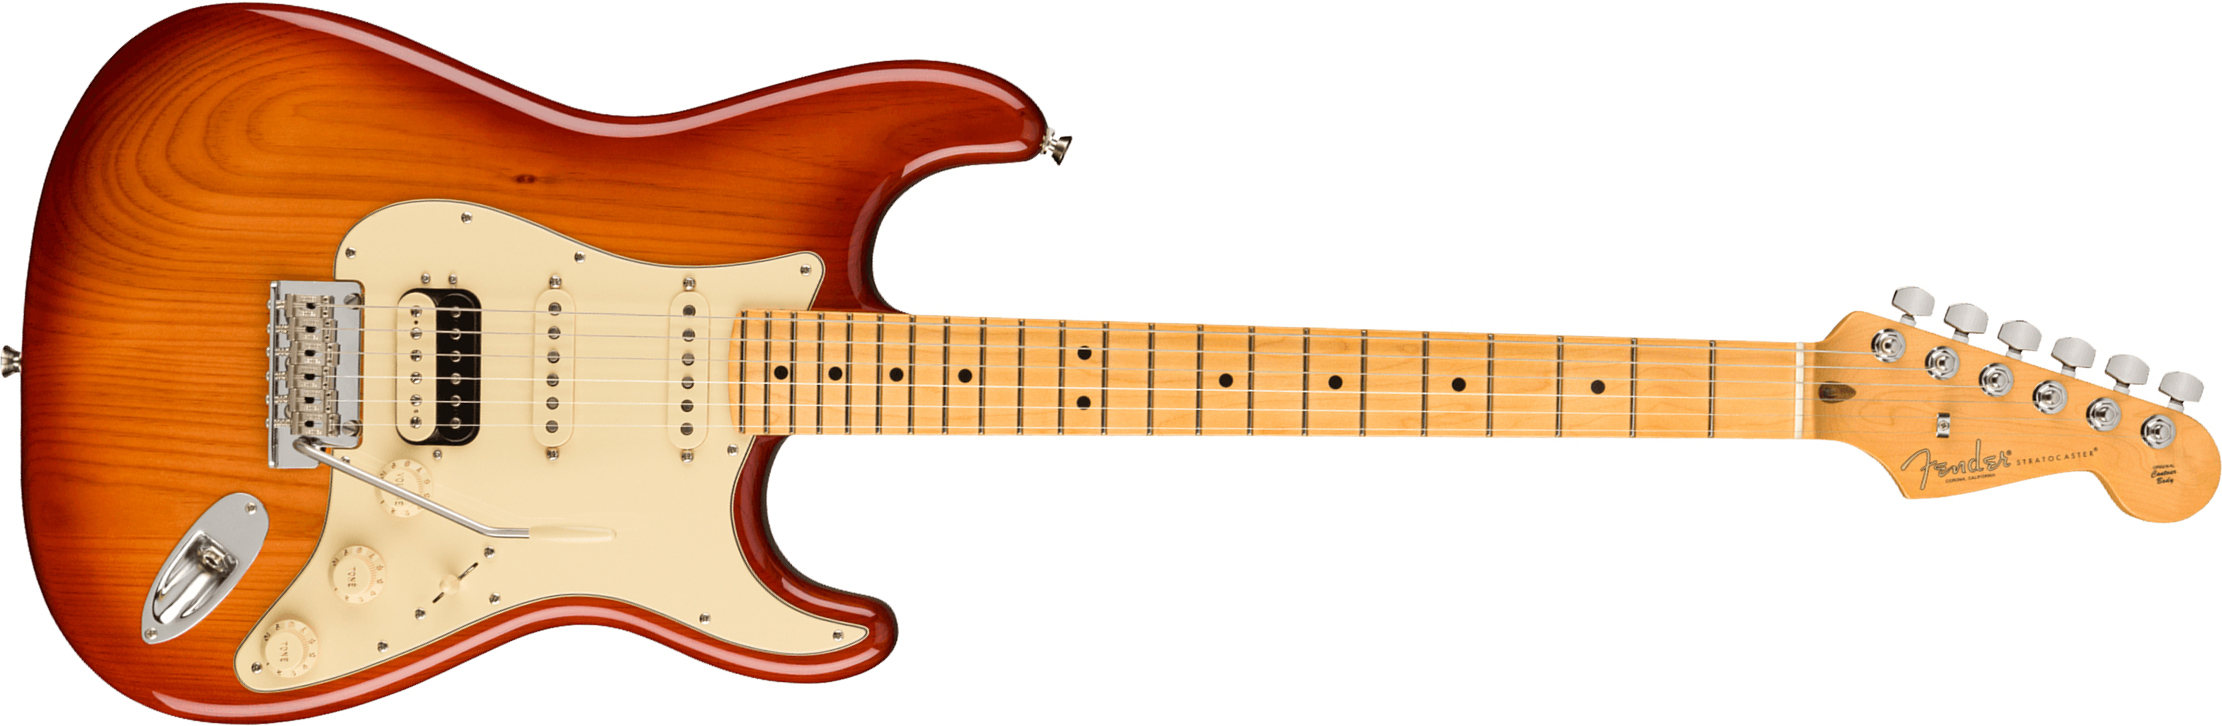 Fender Strat American Professional Ii Hss Usa Mn - Sienna Sunburst - E-Gitarre in Str-Form - Main picture